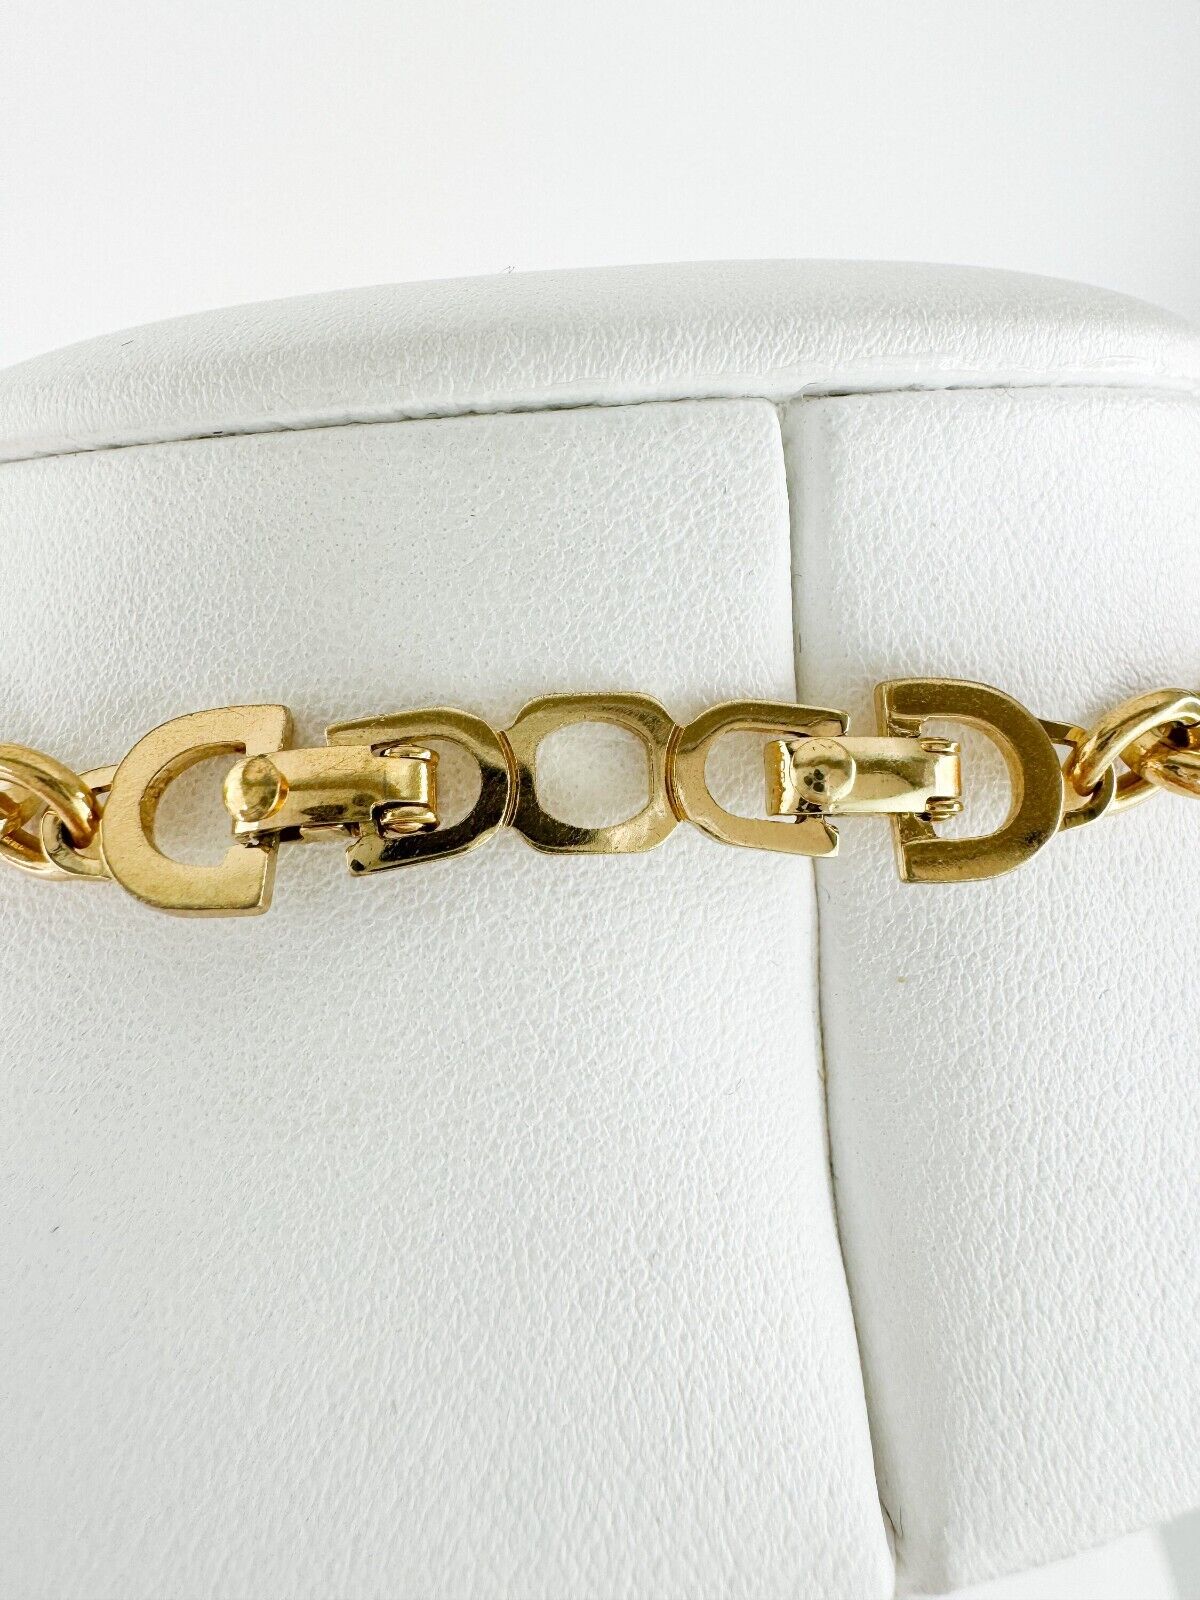 Christian Dior Necklace, 1990’s Dior necklace,  Dior 5 Charms Marine Necklace, Dior  Anchor Necklace, Gold  Necklace, Dior Vintage Jewelry